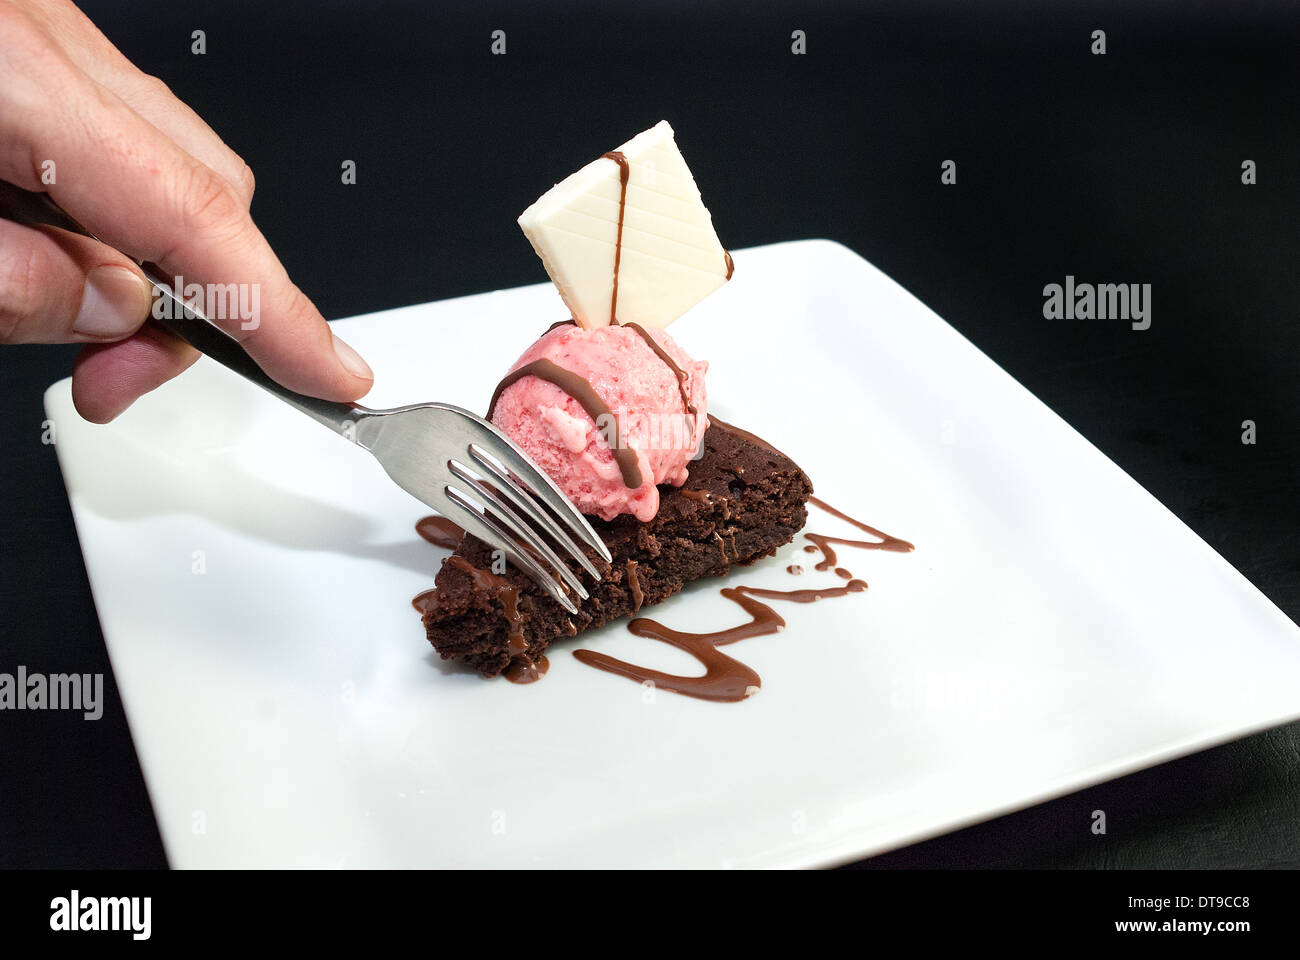 Close-up of a man's hand using a fork to get a taste of brownie with raspberry ice-cream and a white chocolate garnish. Stock Photo